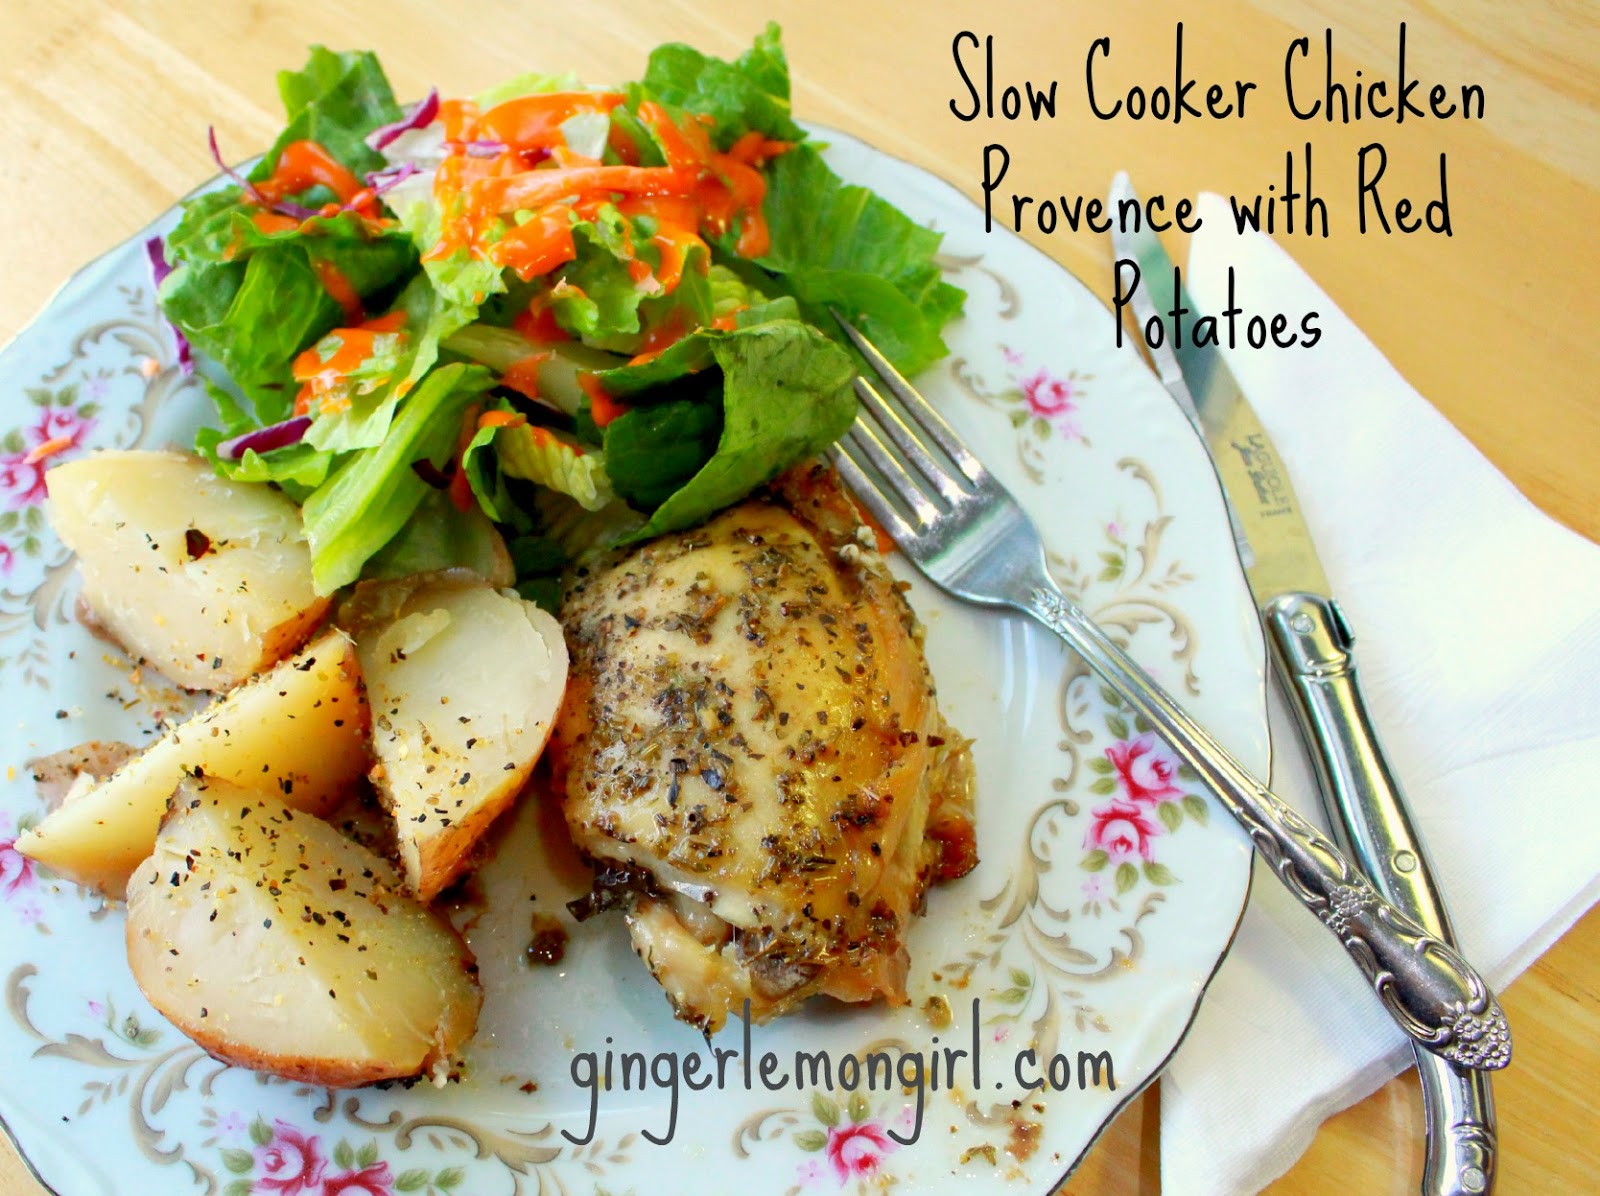 Carrie S. Forbes - Gingerlemongirl.com: Slow Cooker Chicken Provence ...